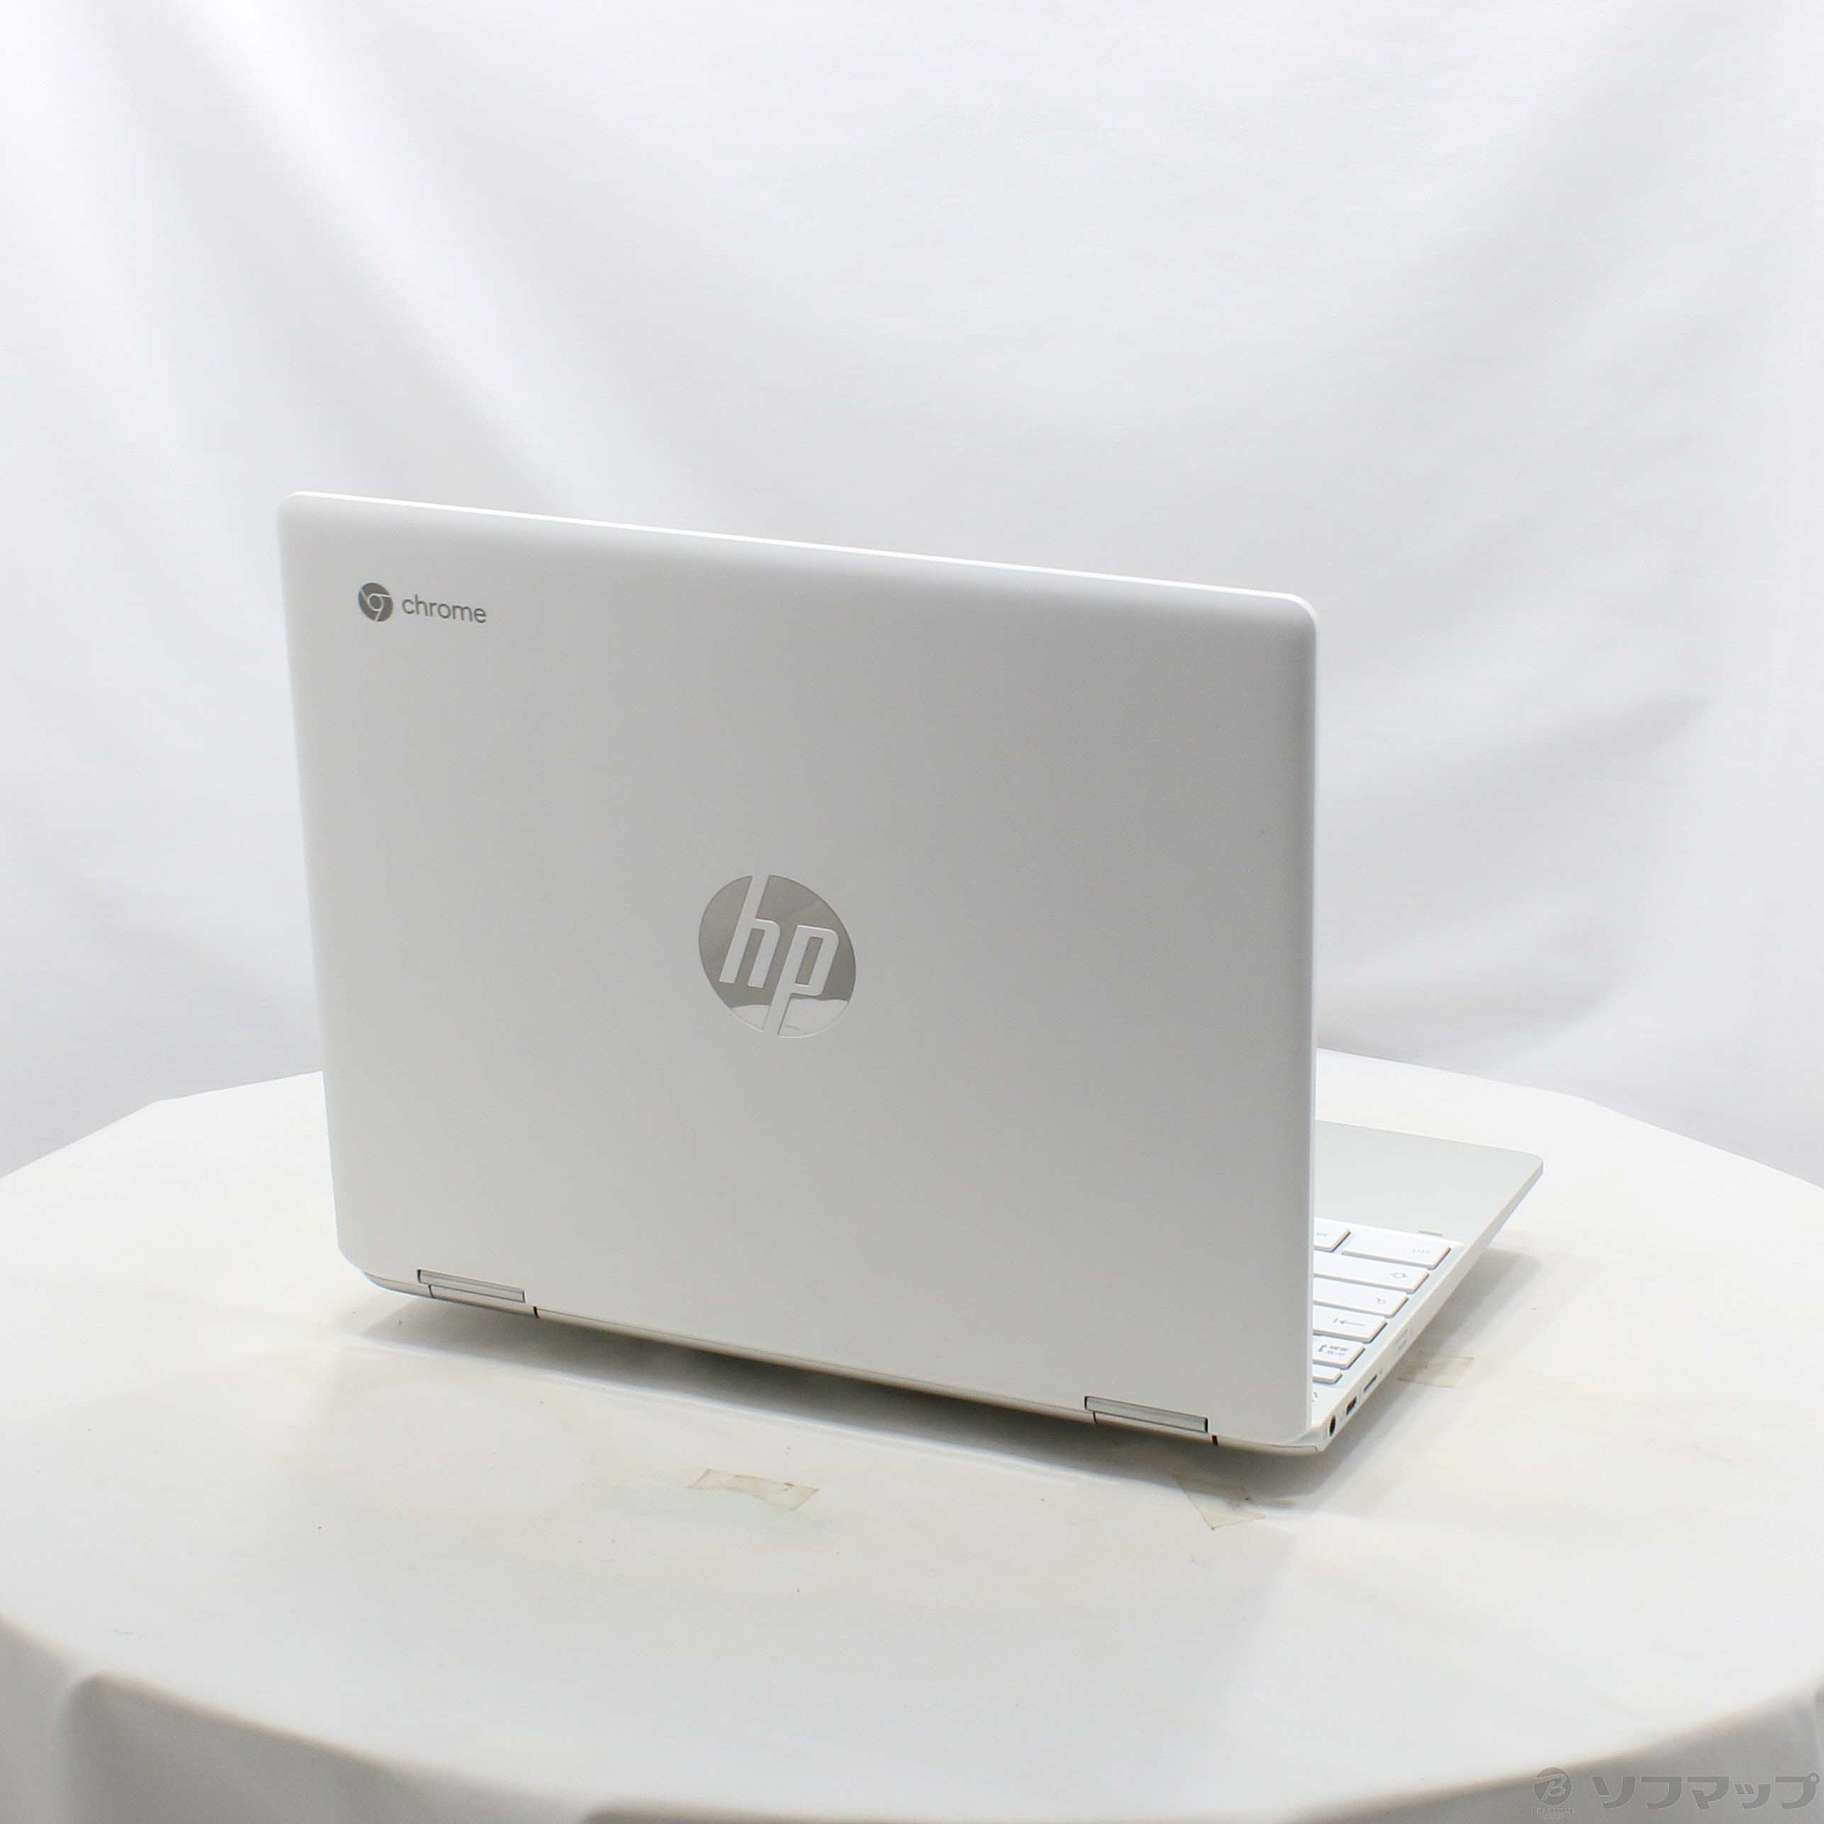 HP Chromebook x360 12b-ca0002TU 8MD65PA#ABJ